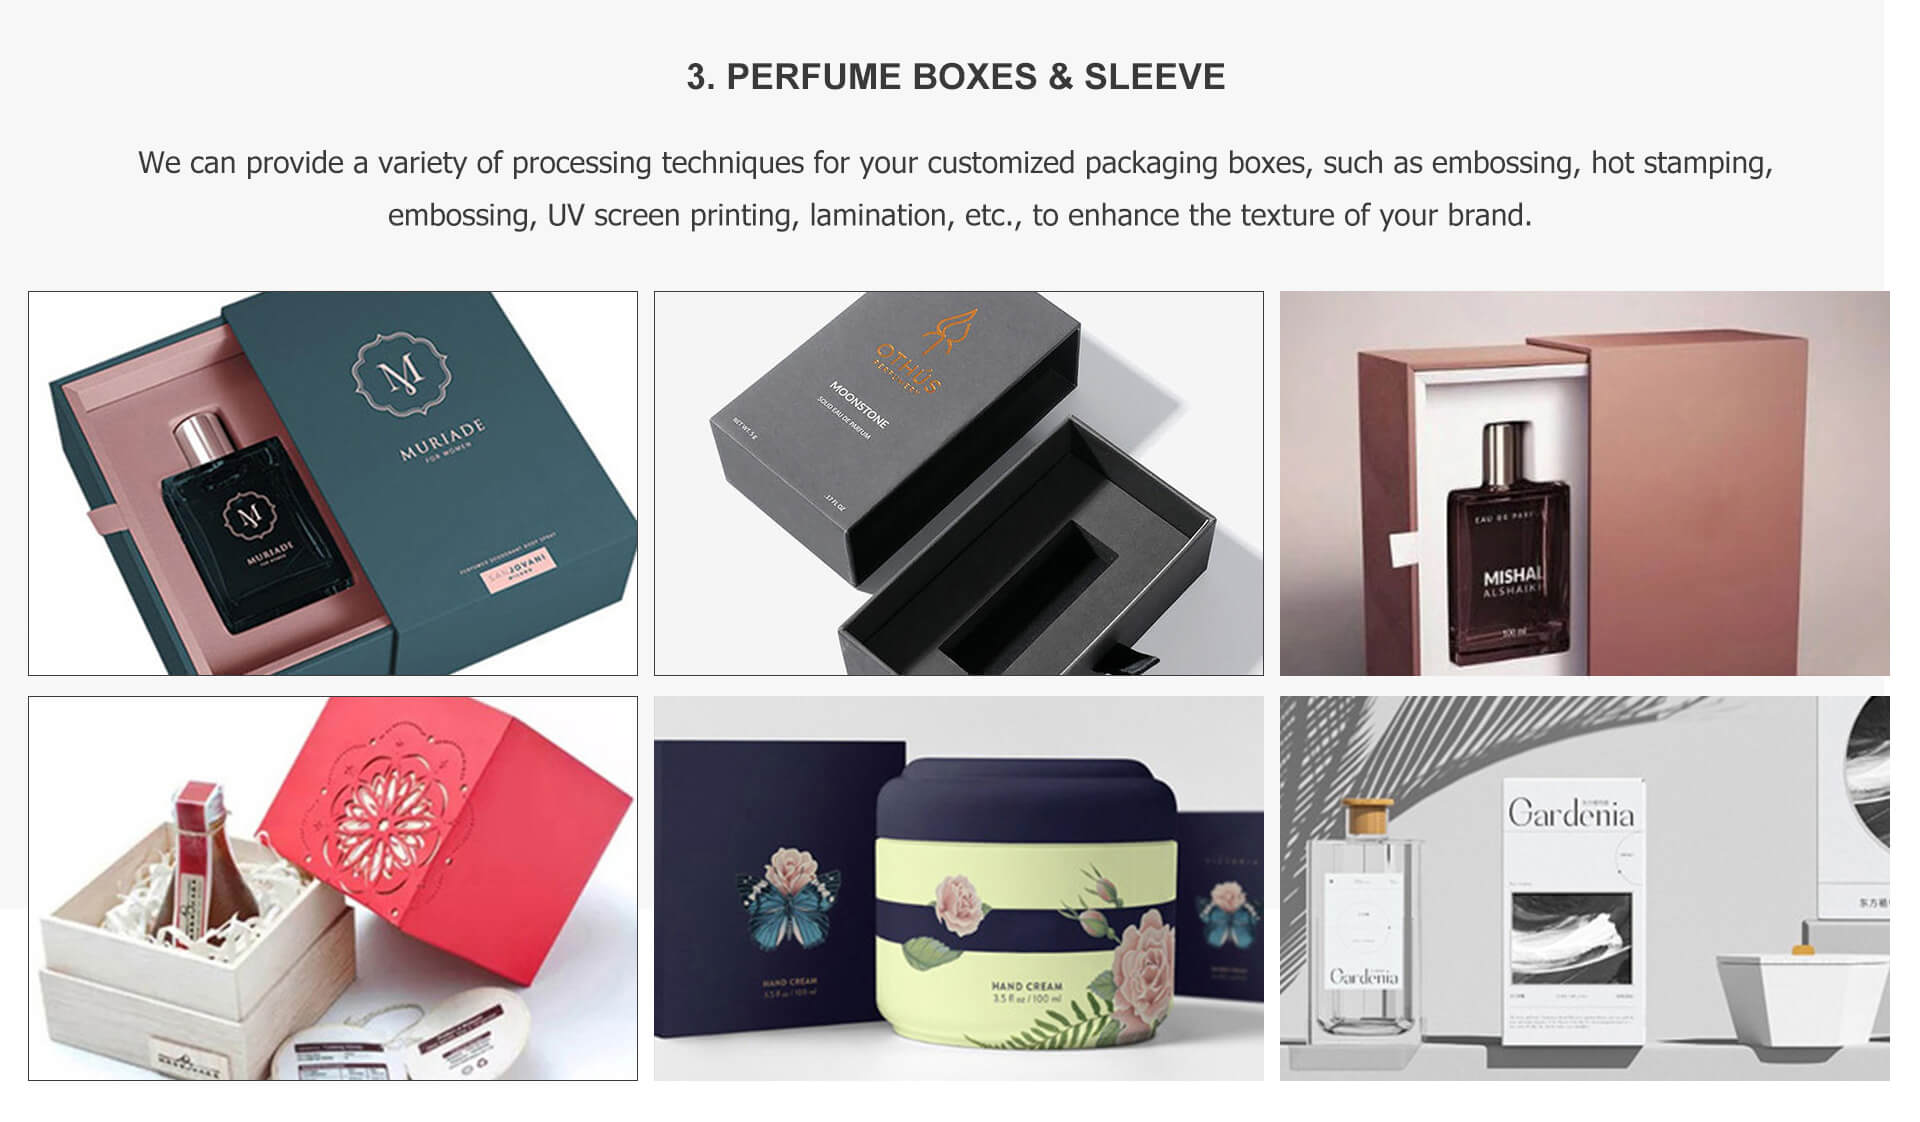 Perfume Boxes & Sleeve